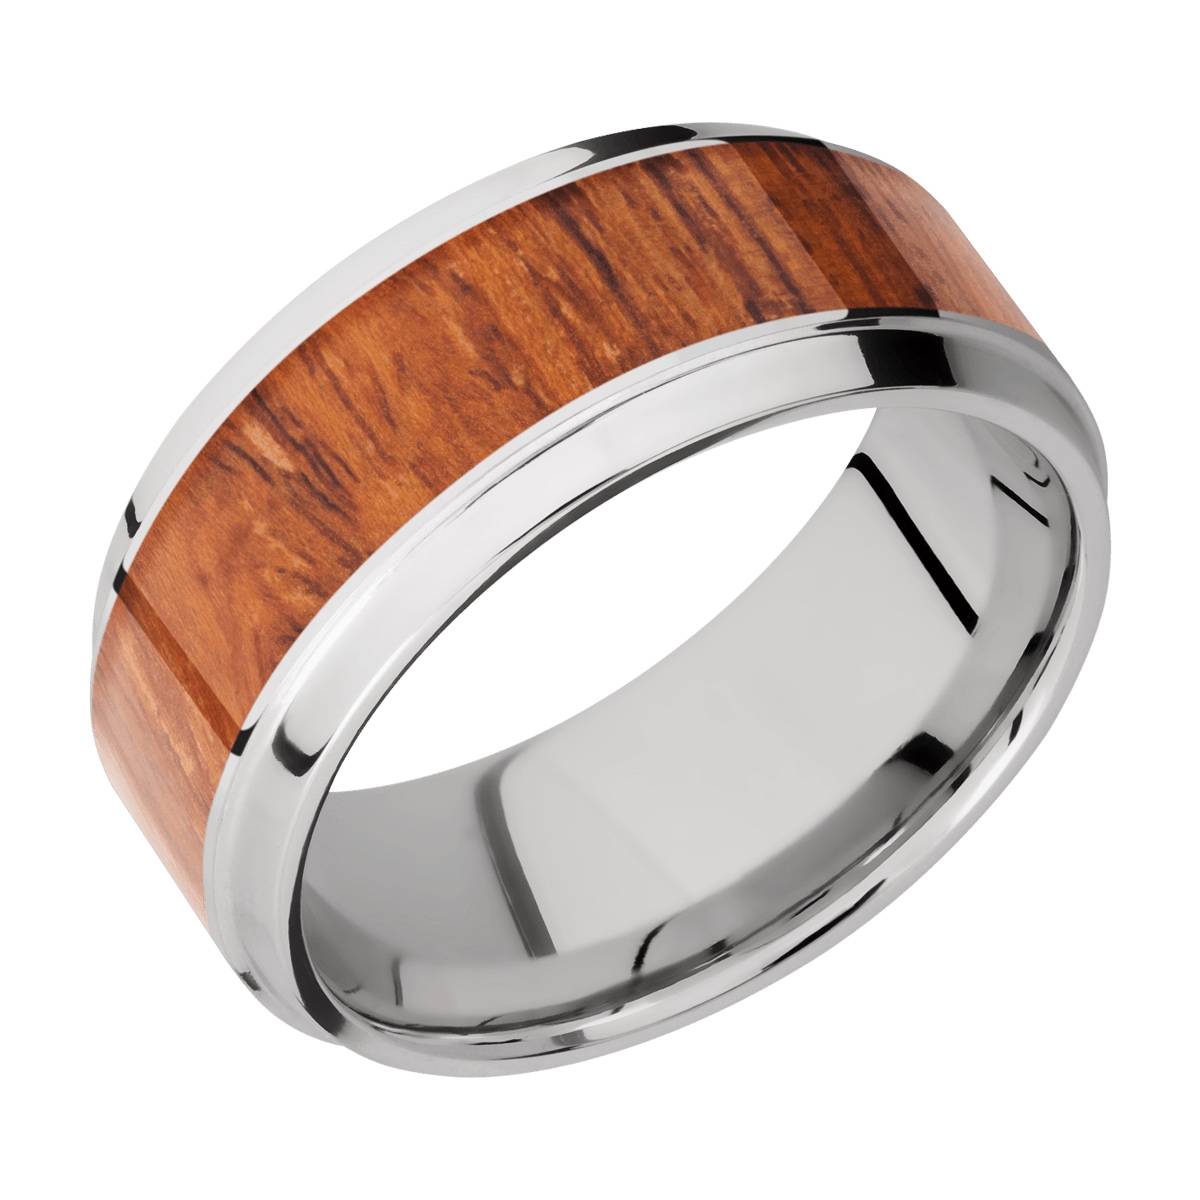 Lashbrook CC9B16(S)/HARDWOOD Cobalt Chrome Wedding Ring or Band